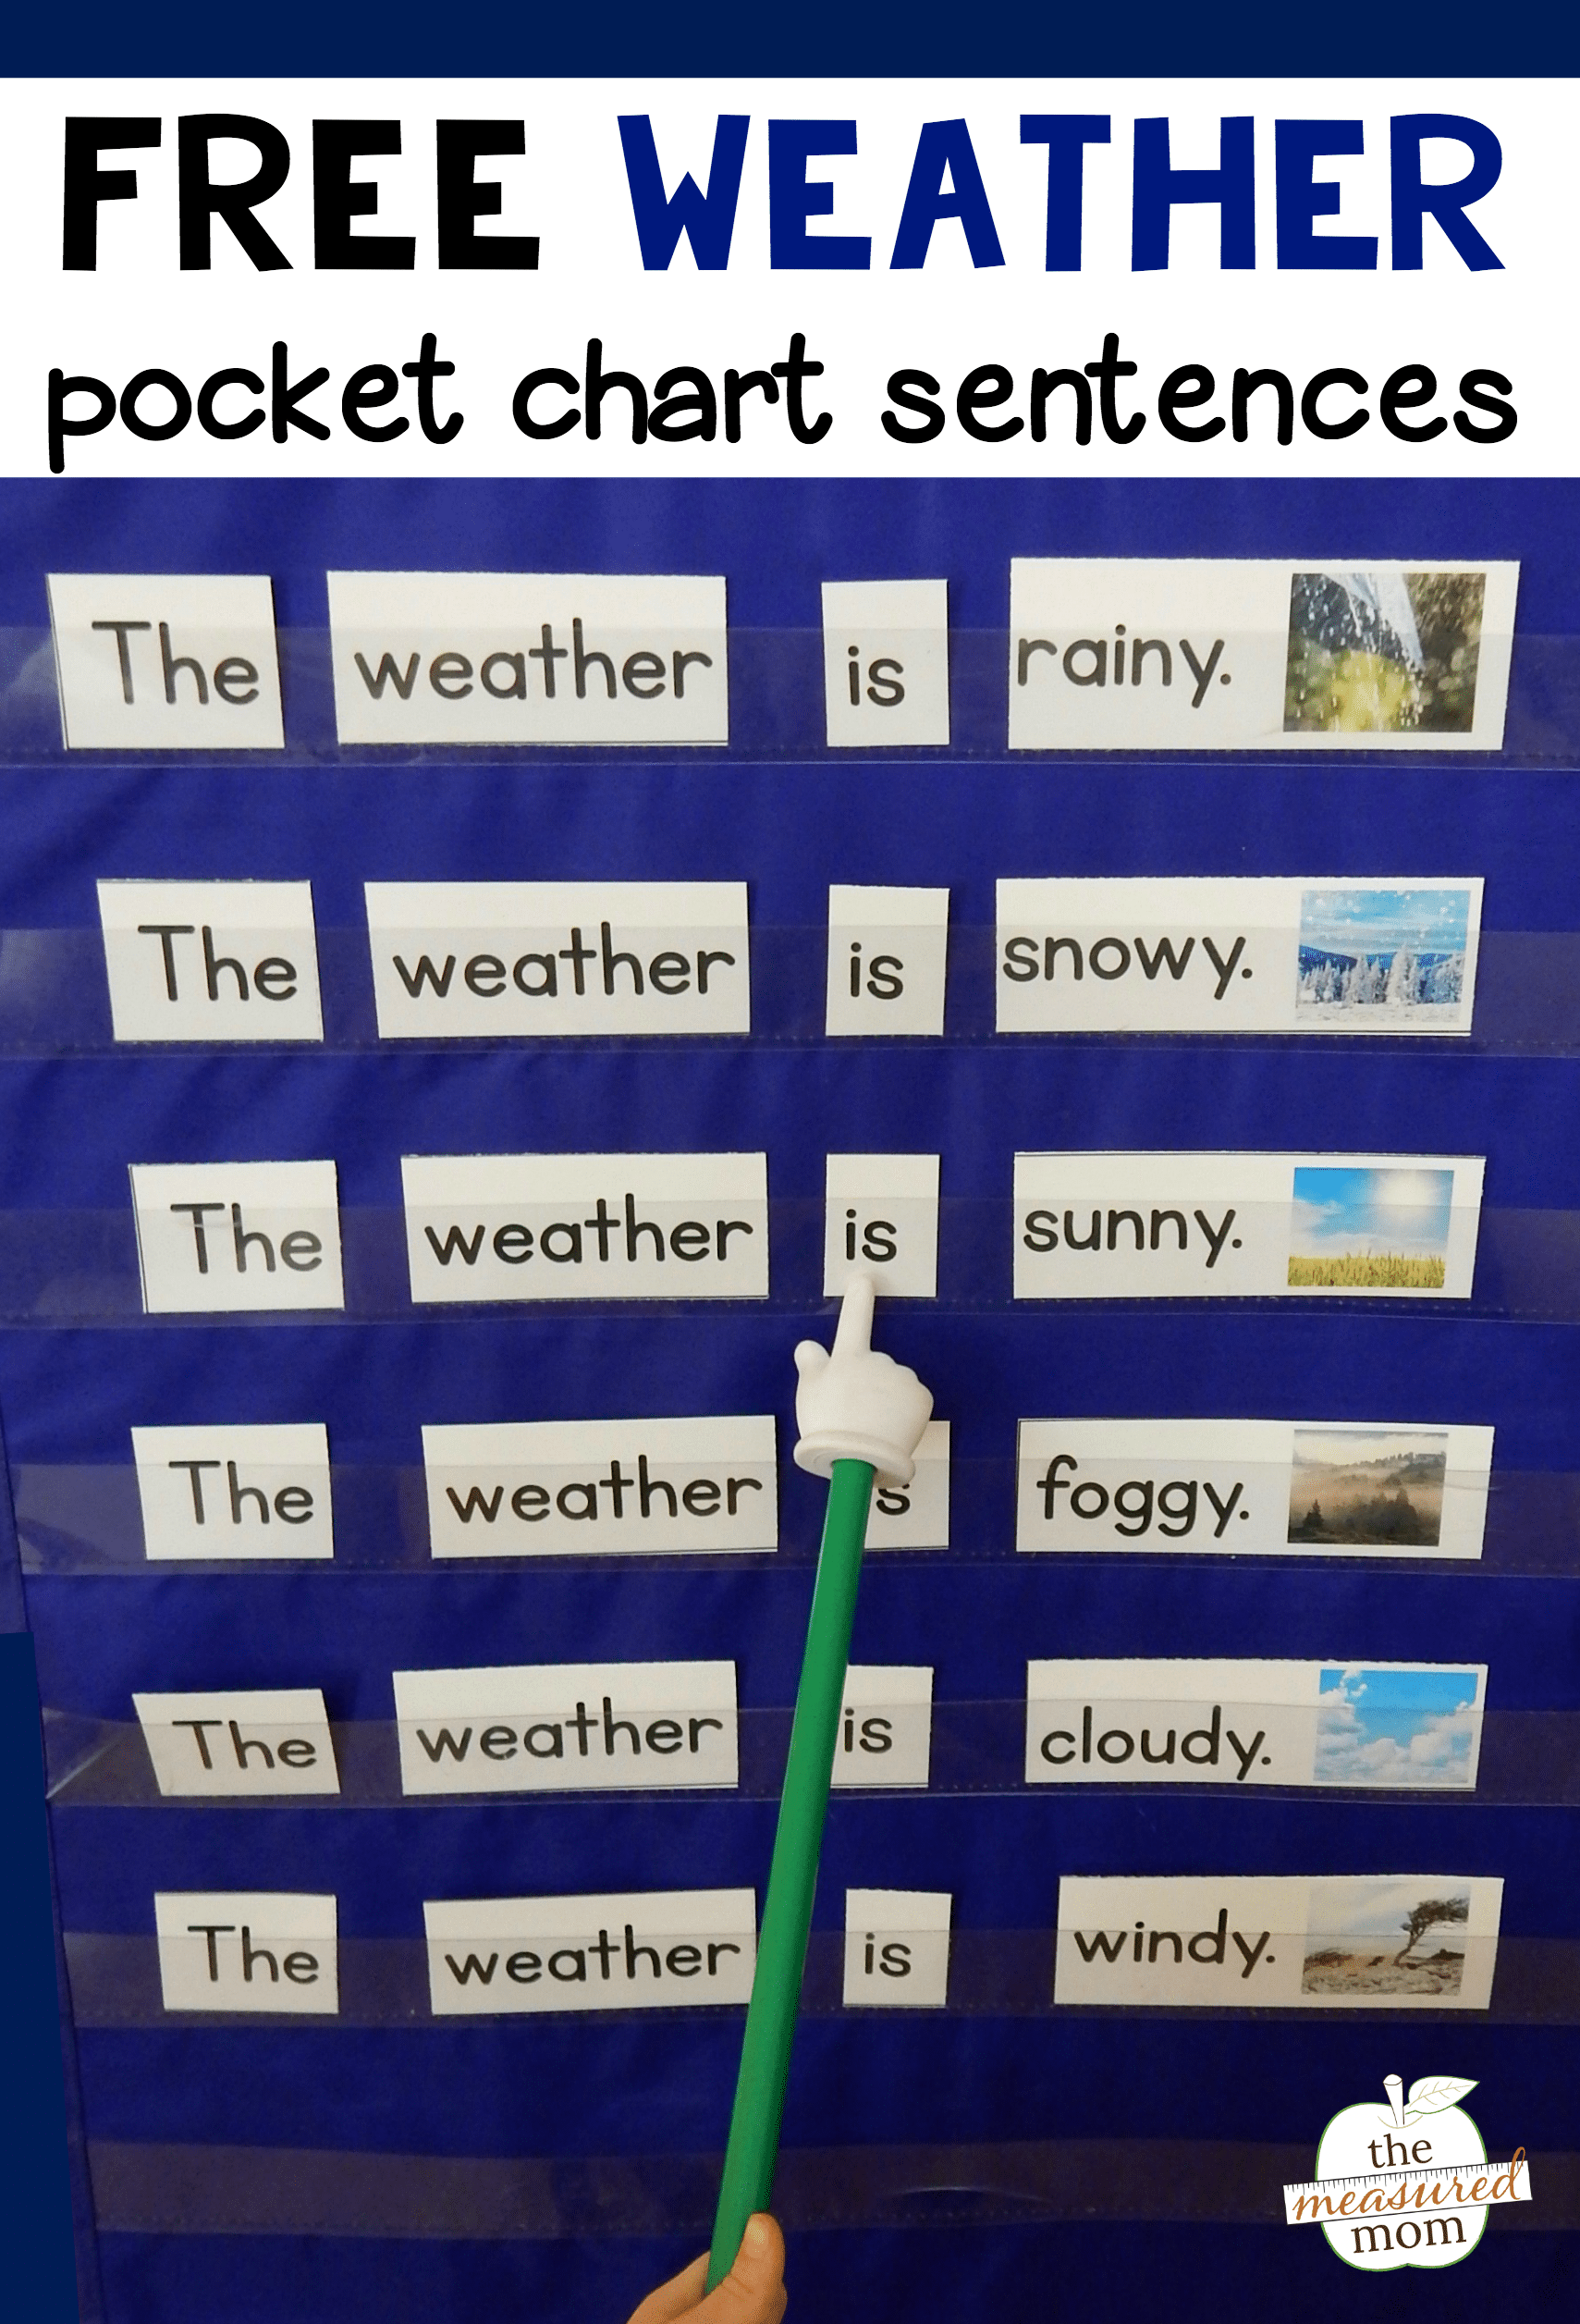 weather-pocket-chart-sentences-the-measured-mom